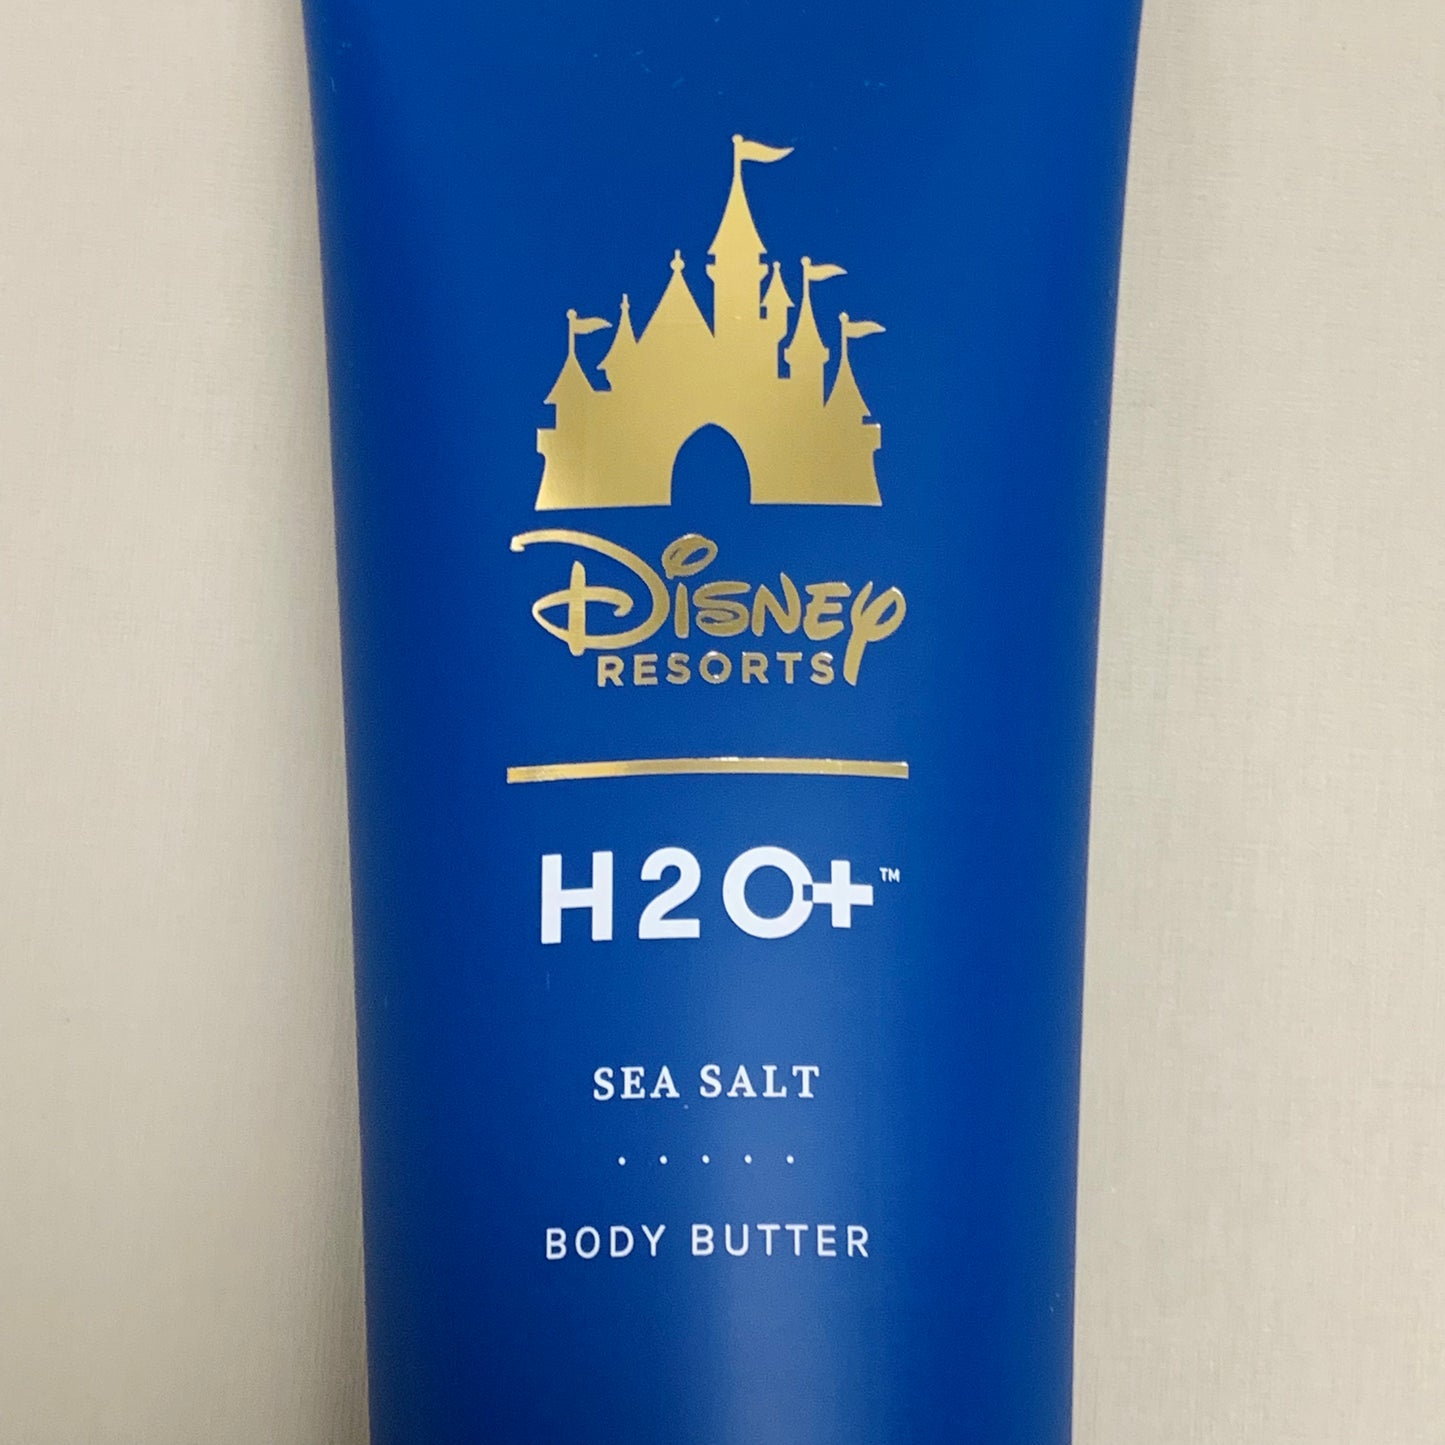 DISNEY Resorts H2O+ Sea Salt Body Butter 8 oz Tube DISCONTINUED 19048 (New)